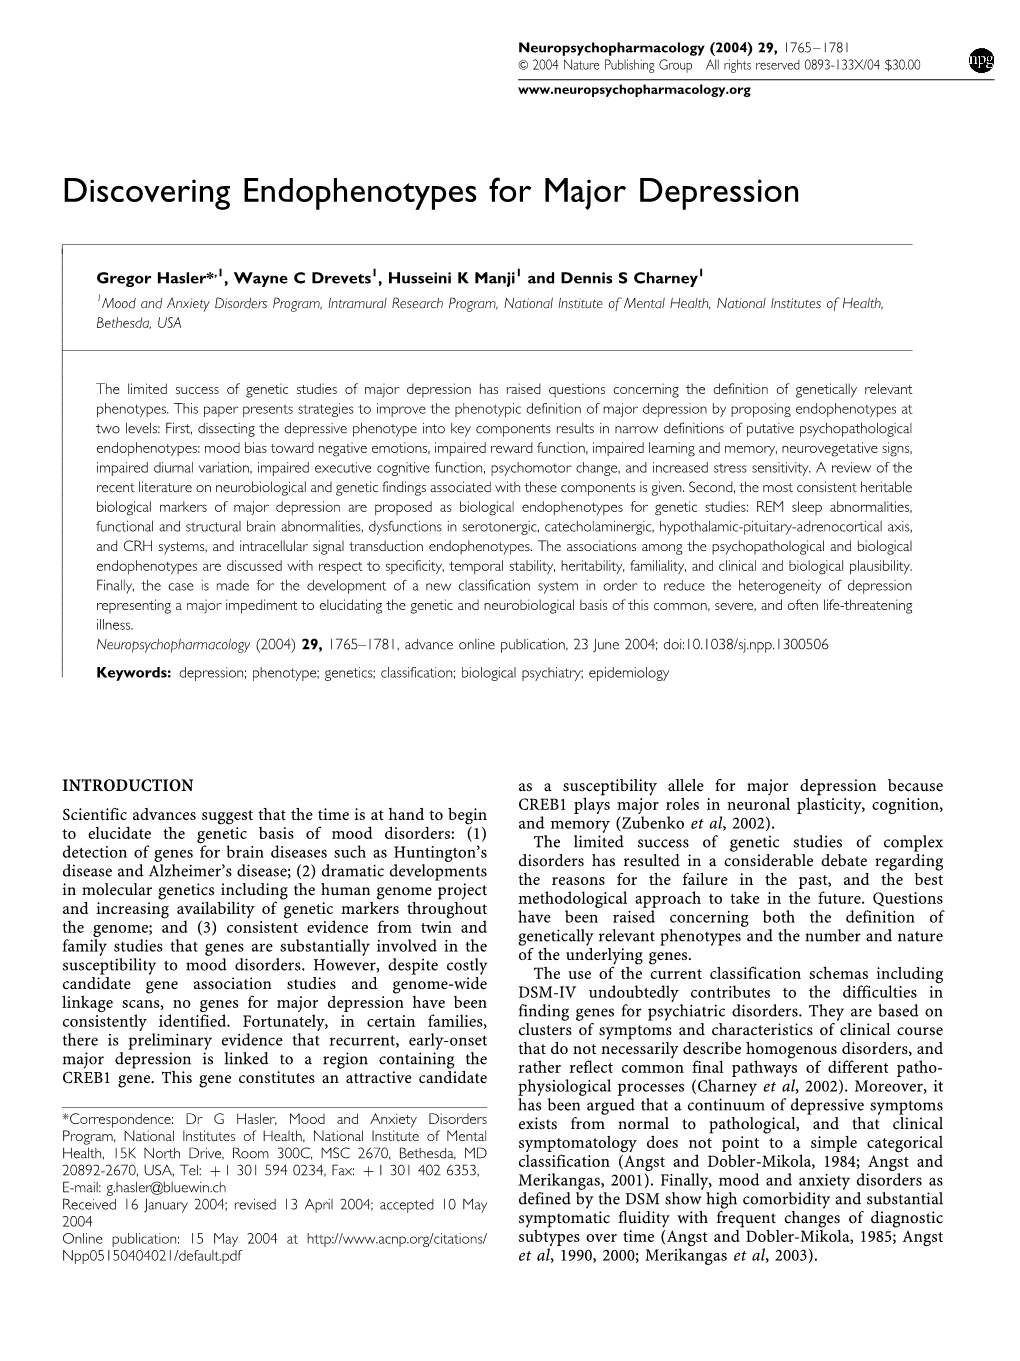 Discovering Endophenotypes for Major Depression